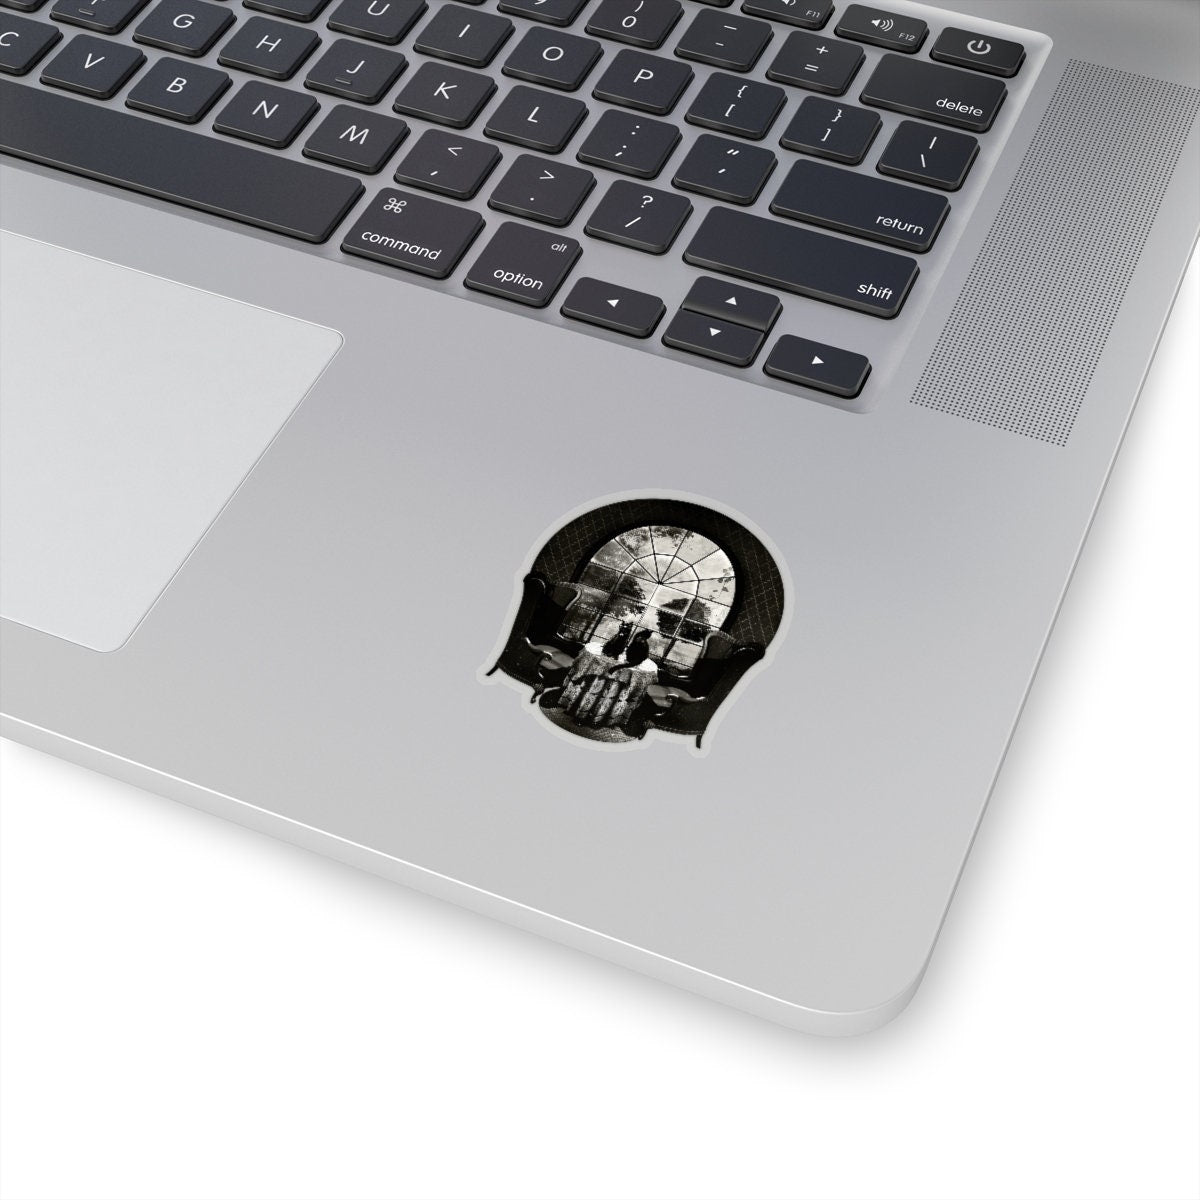 Skull Sticker Set Of Five, Skull Art Sticker Set, Gothic Skull Vinyl Sticker Set Gift, Skull Drawing Gift, Laptop Phone Kiss-Cut Sticker Set